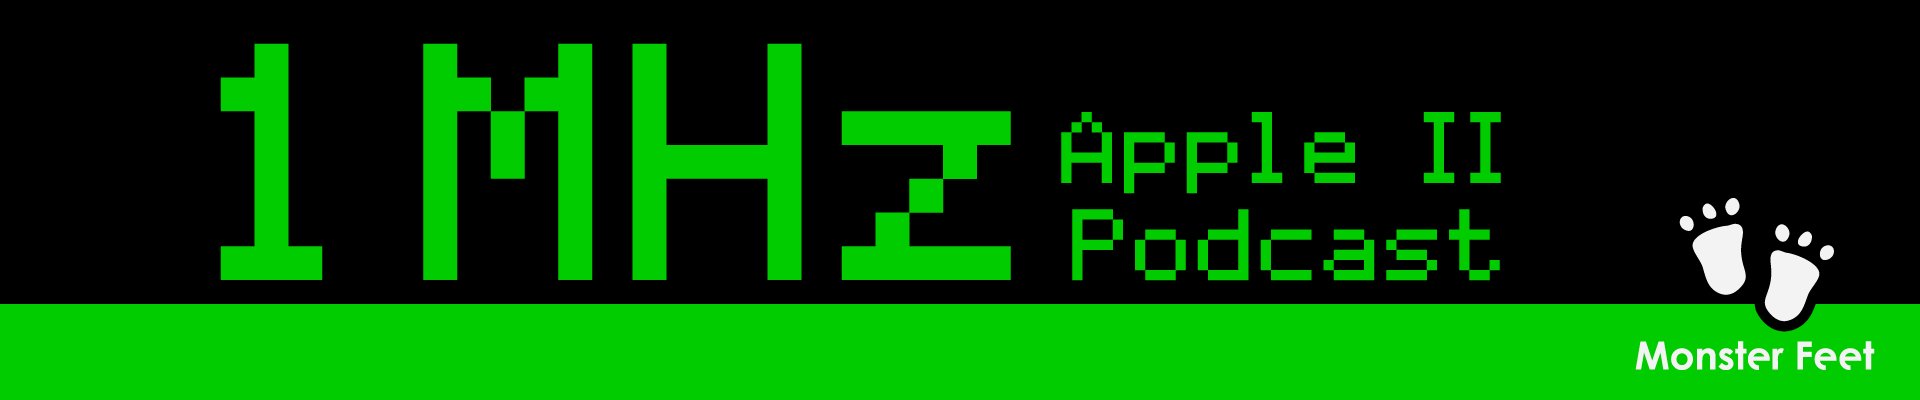 1 MHz: An Apple II podcast: 8-bit Apple II reviews and 2-bit Apple II news